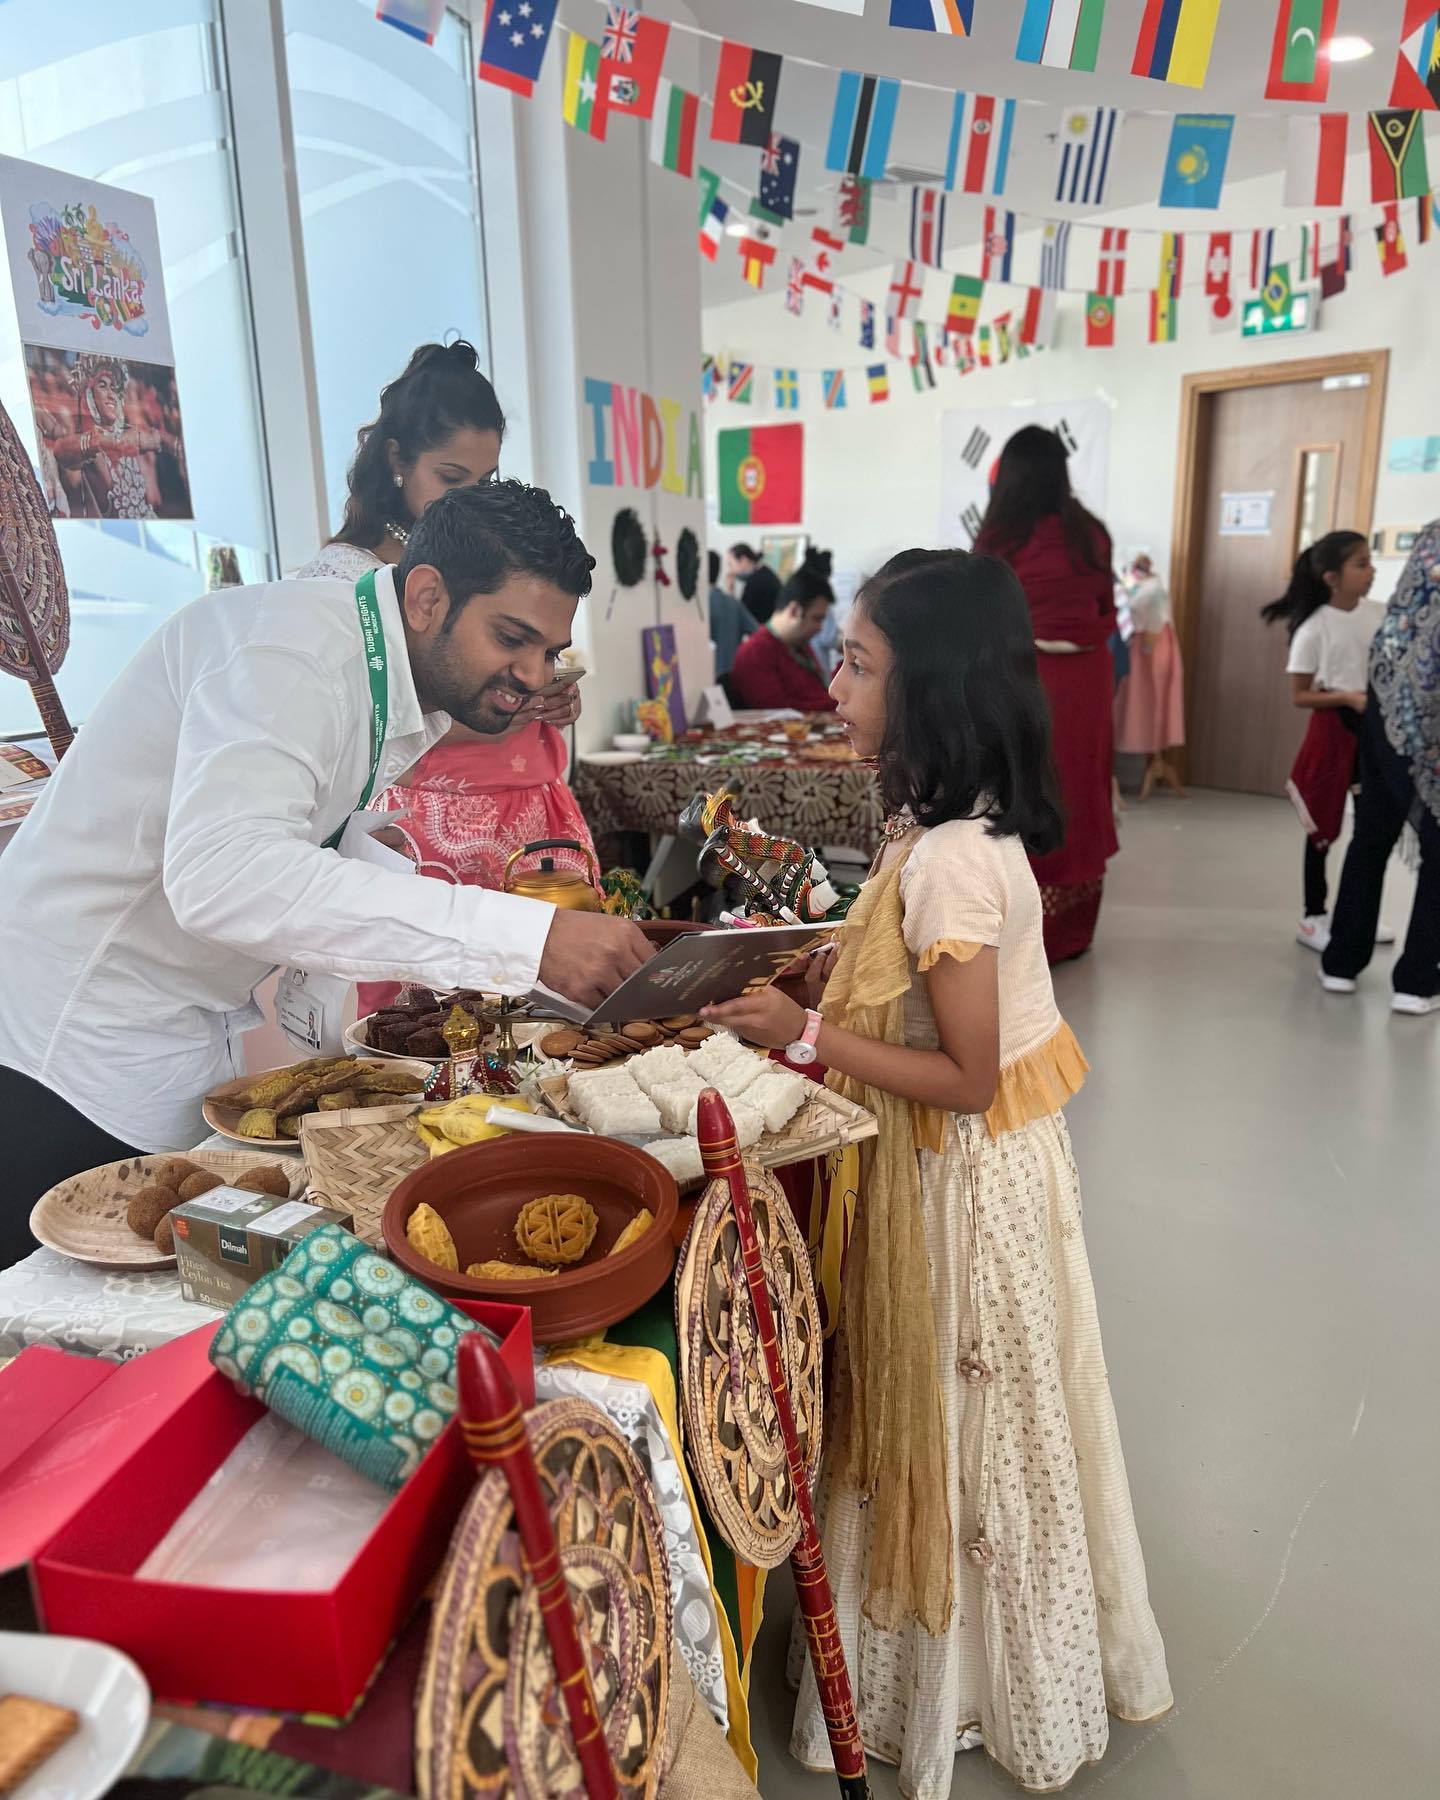 58 Nationalities Under 1 Roof - Dubai Heights Academy Celebrates Diversity on International Day